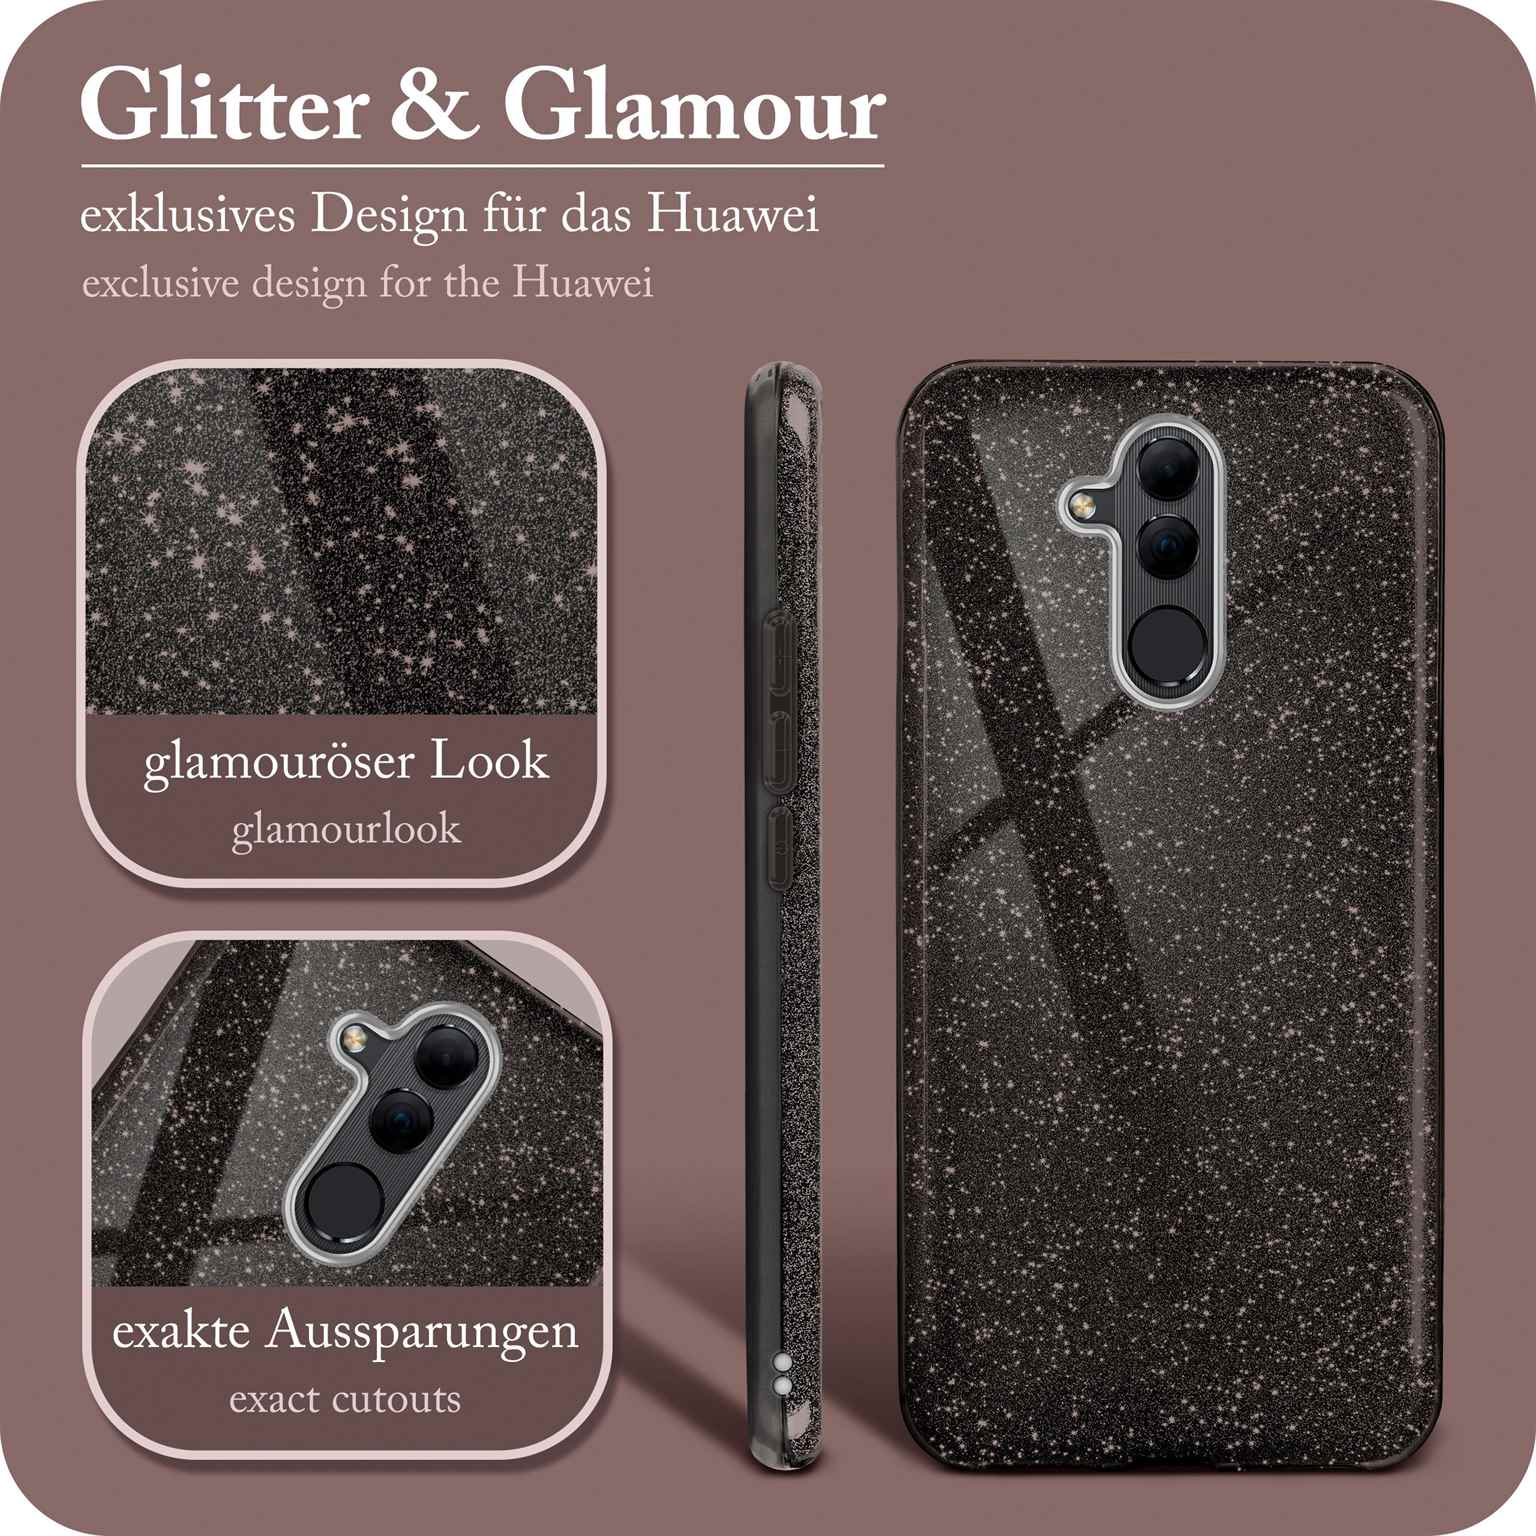 Mate 20 Glitter Glamour Lite, Black Backcover, ONEFLOW - Huawei, Case,